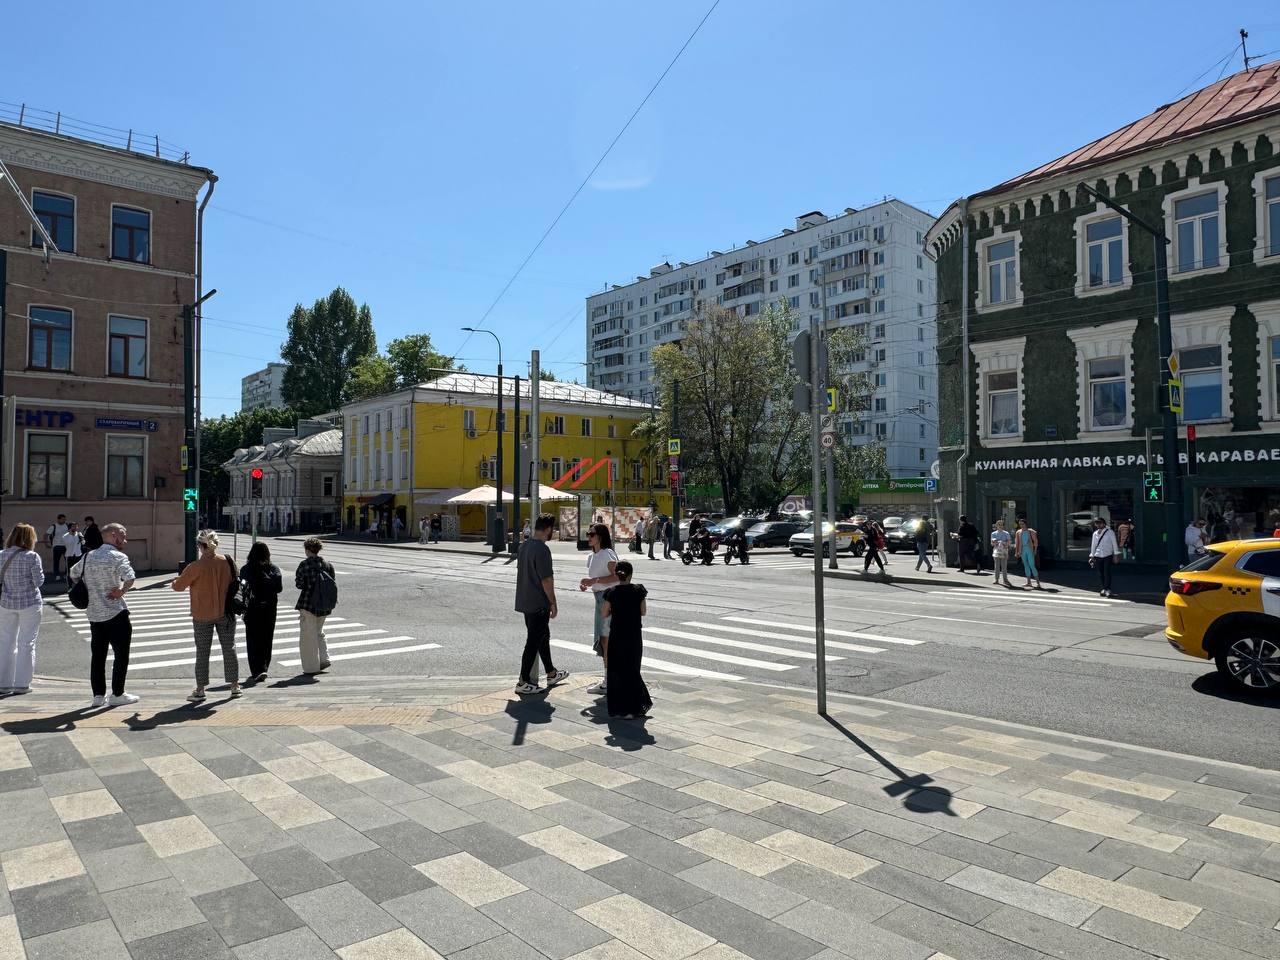 Аренда здания на улице Бауманская 